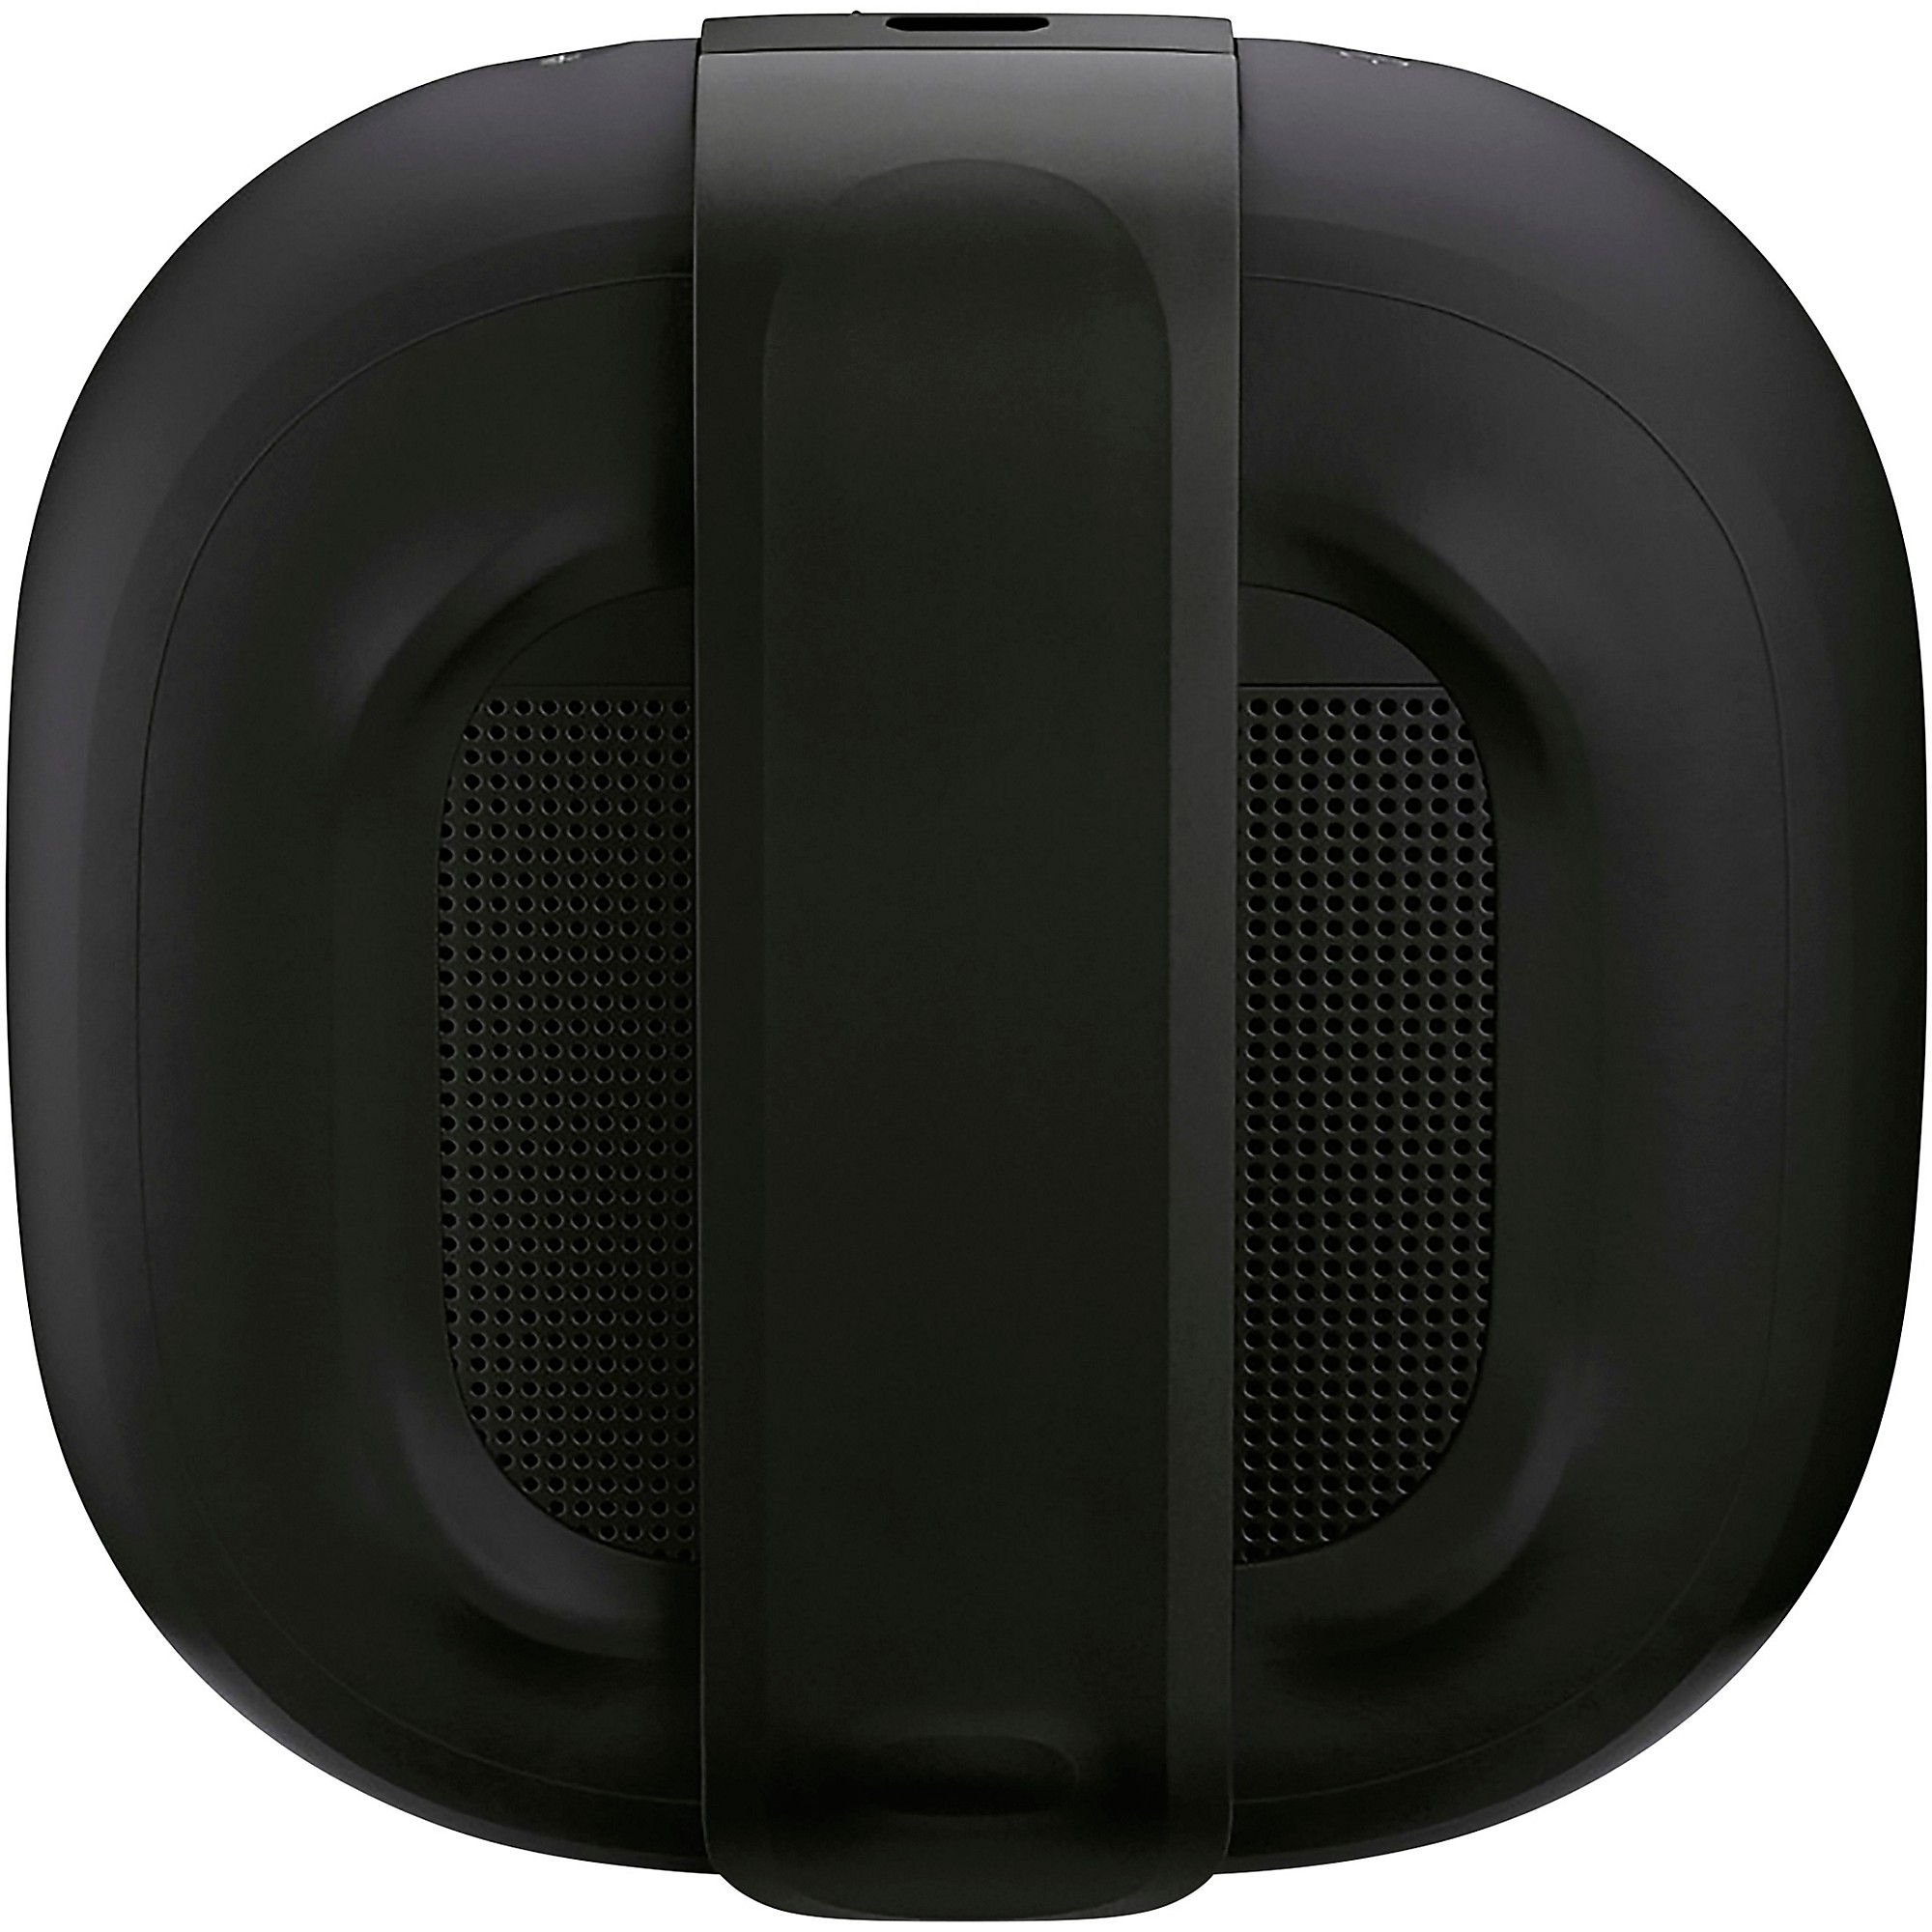 Bose SoundLink Micro Bluetooth Speaker: Small Portable Waterproof Speaker  with Microphone, Black